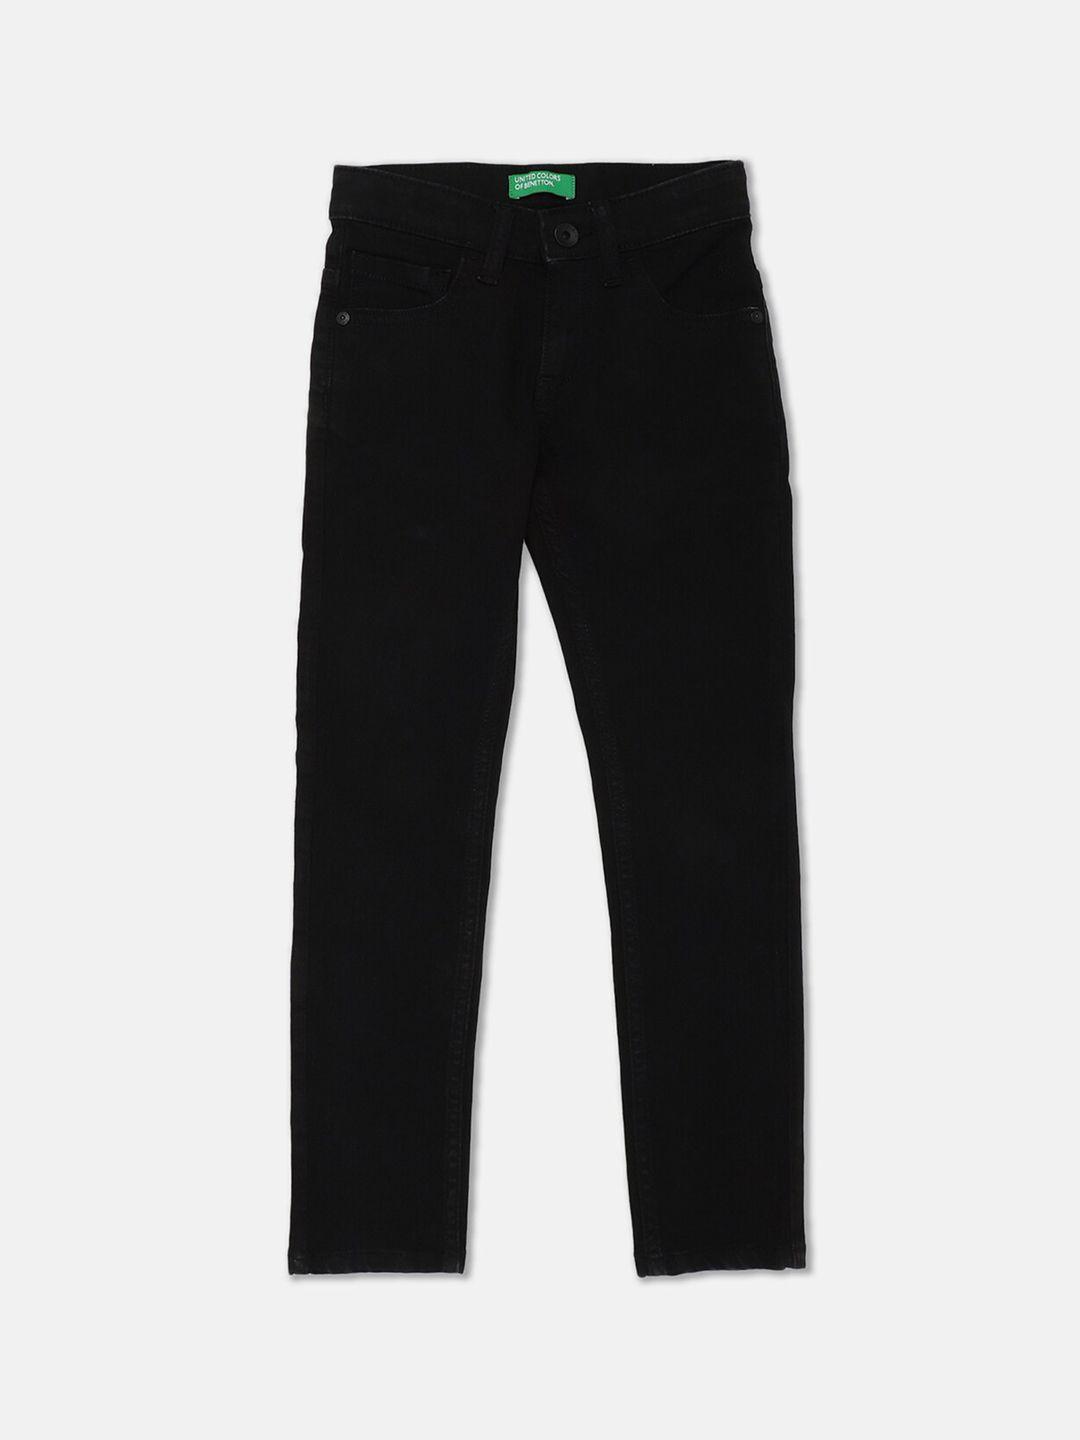 United Colors of Benetton Boys Black Slim Fit Jeans